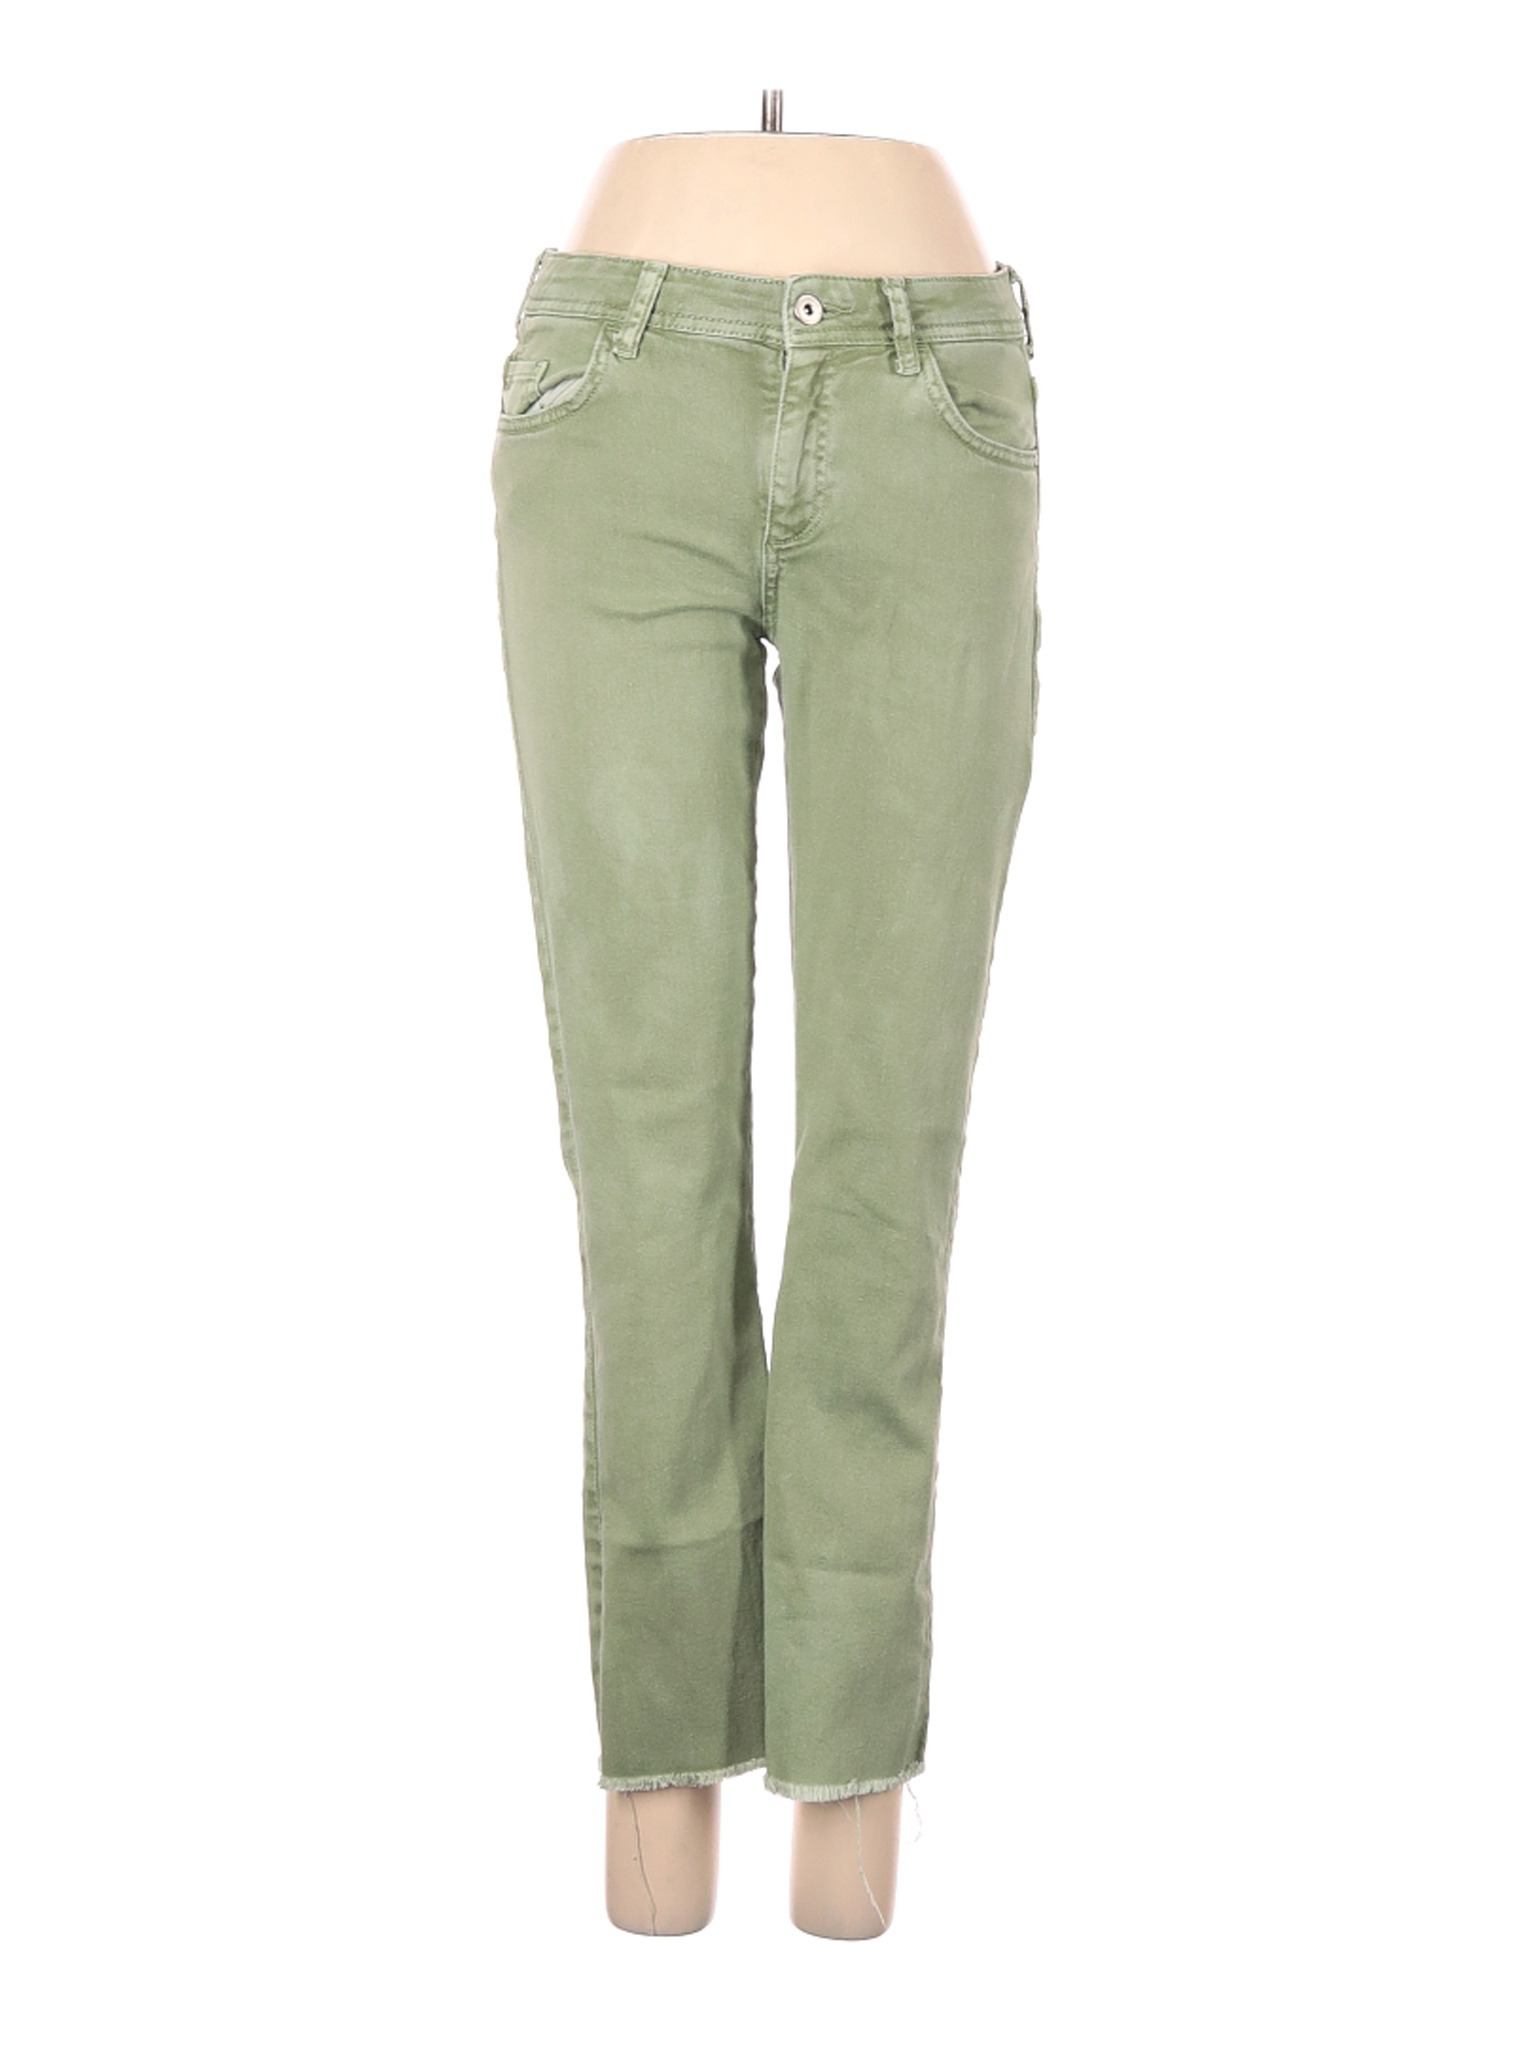 Zara Basic Women Green Jeans 4 | eBay